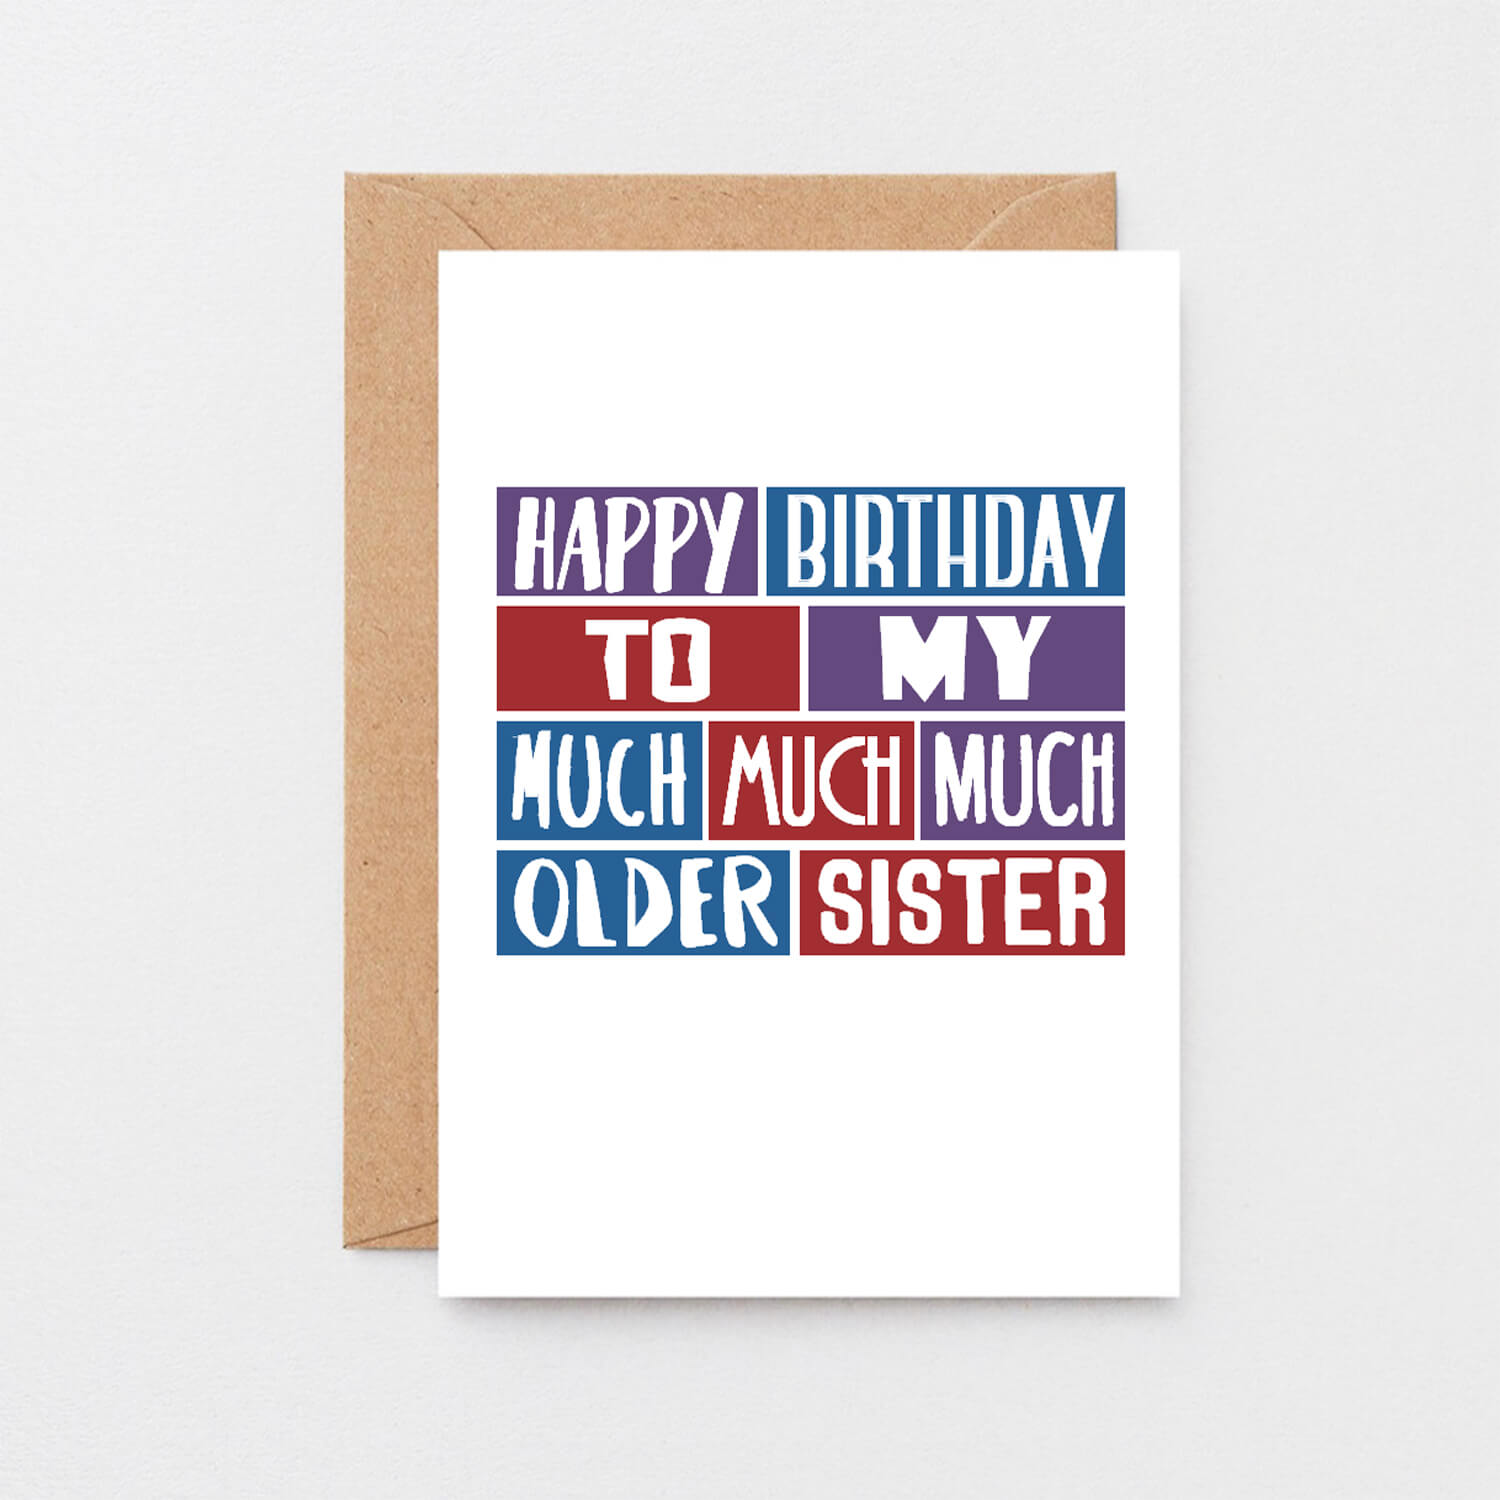 older sister birthday ecards